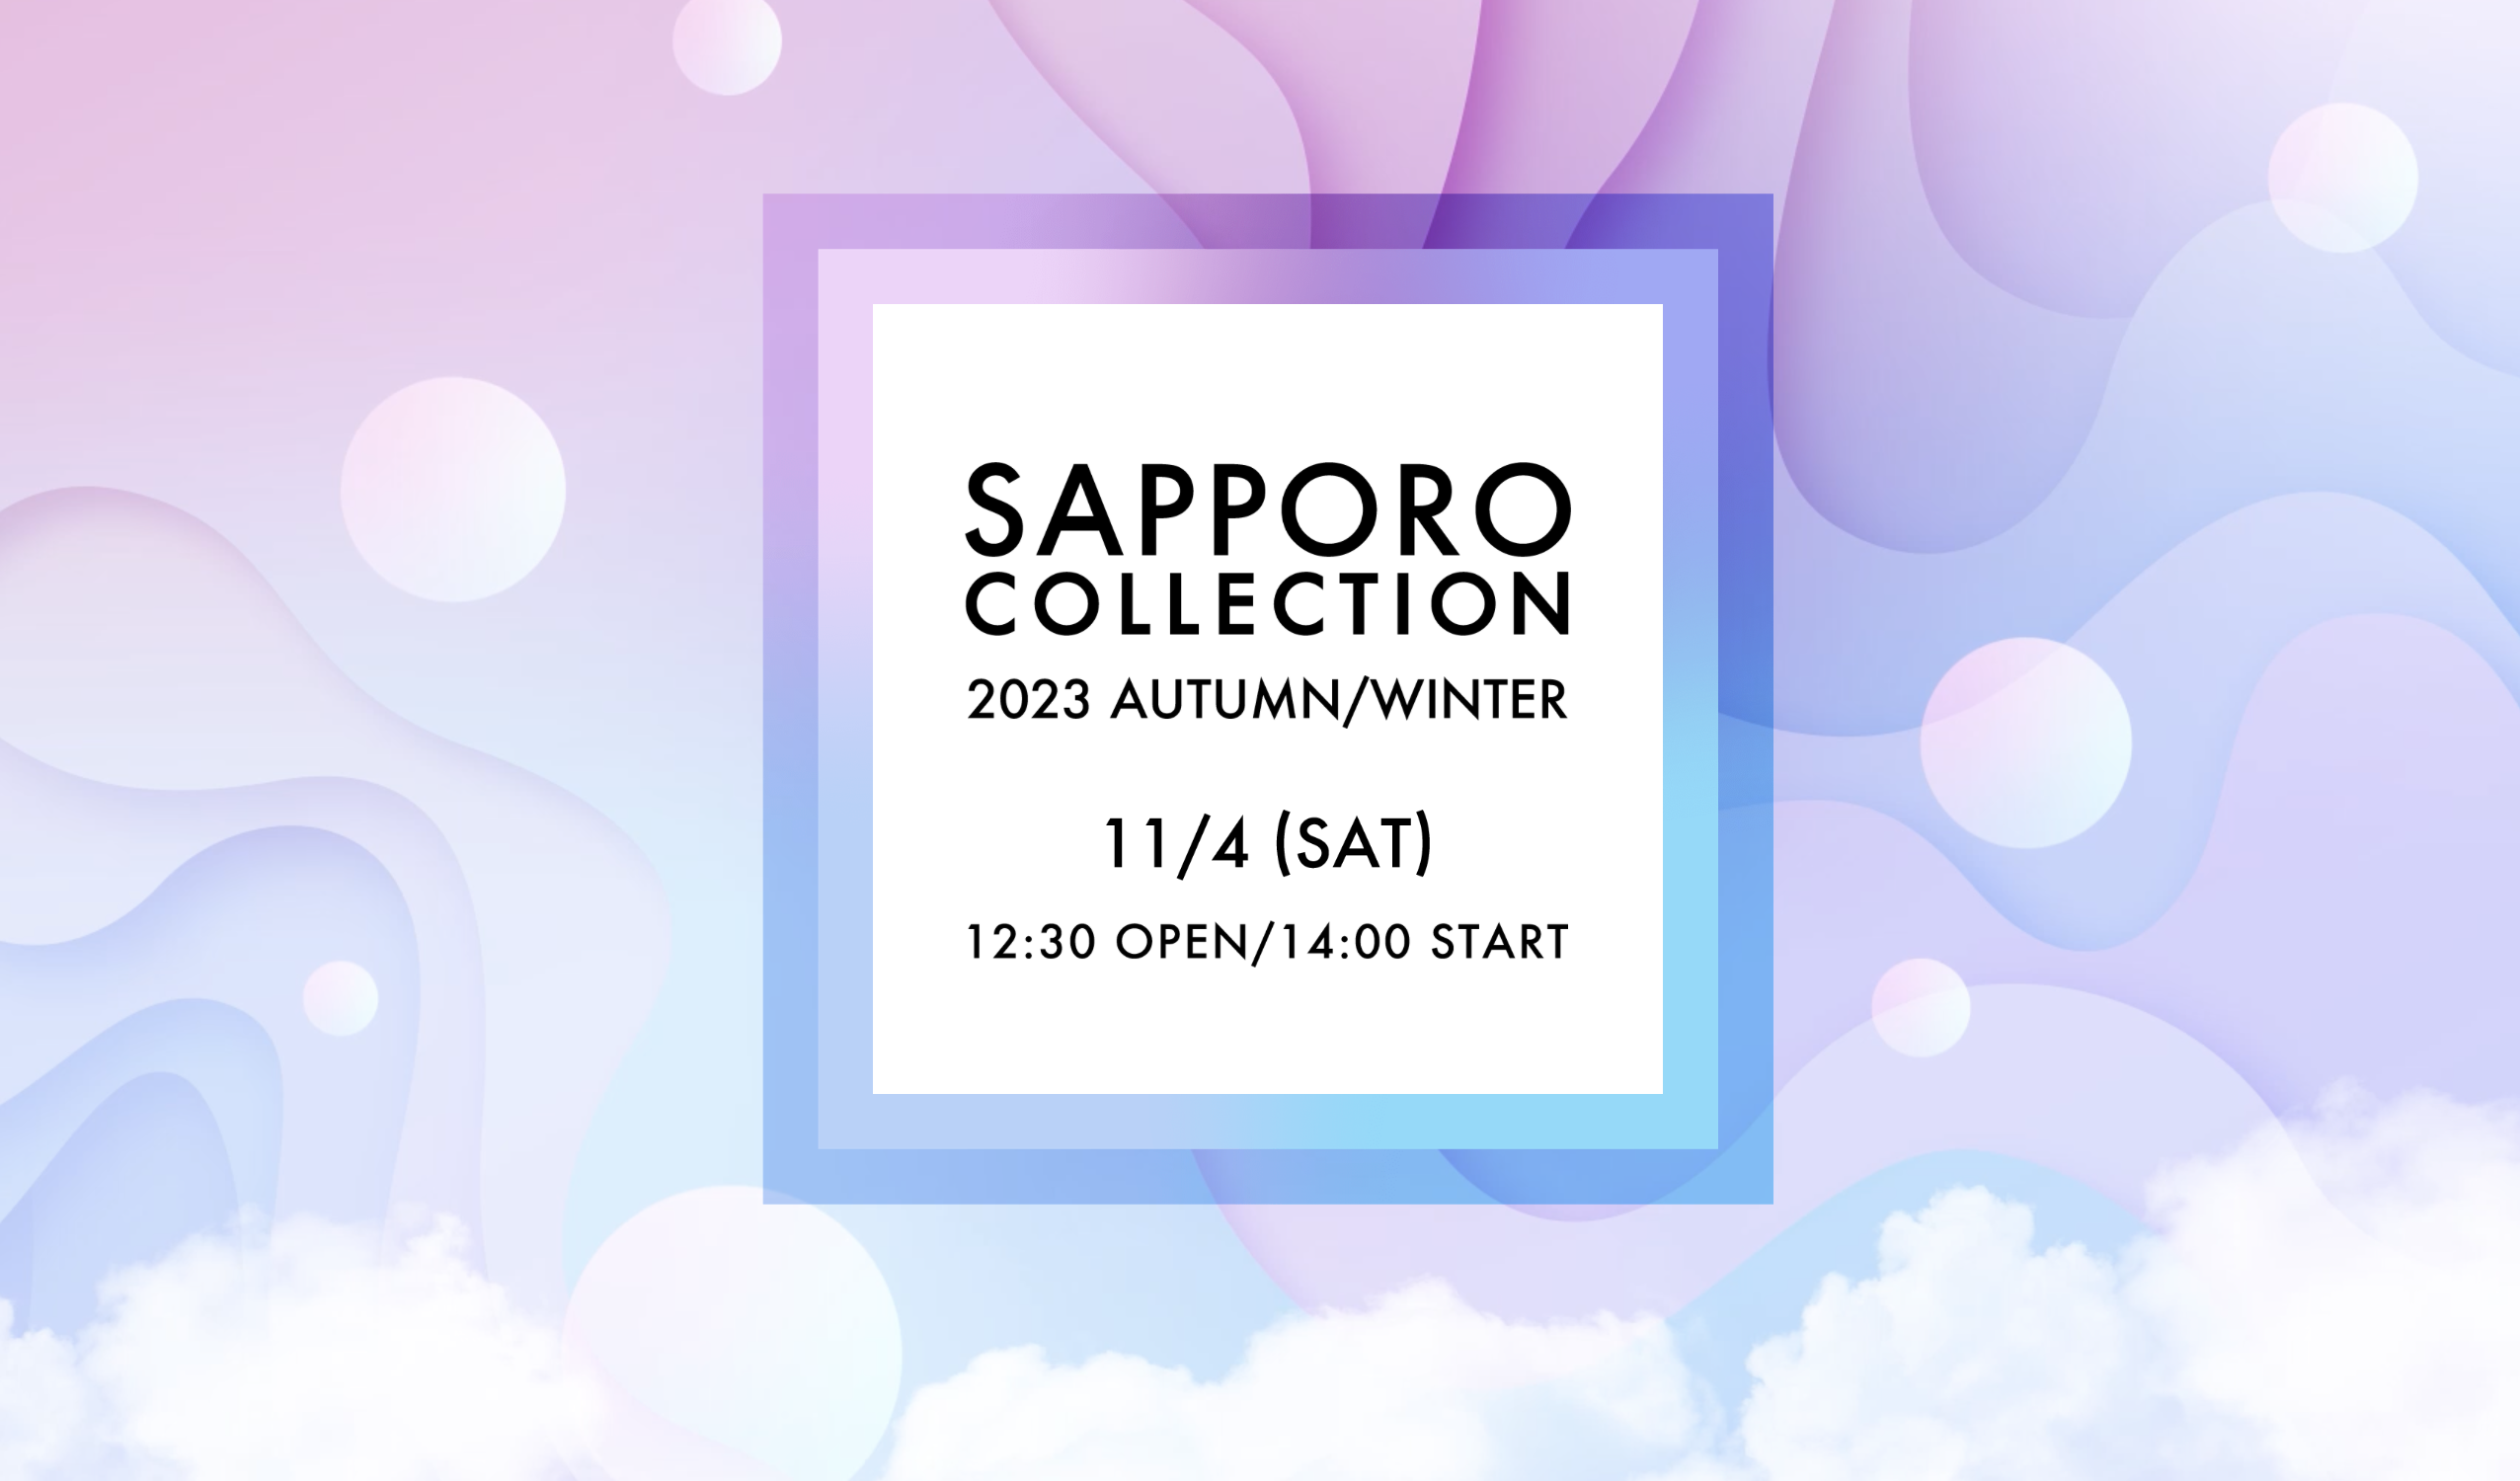 SAPPORO COLLECTION 2023 AUTUMN/WINTER